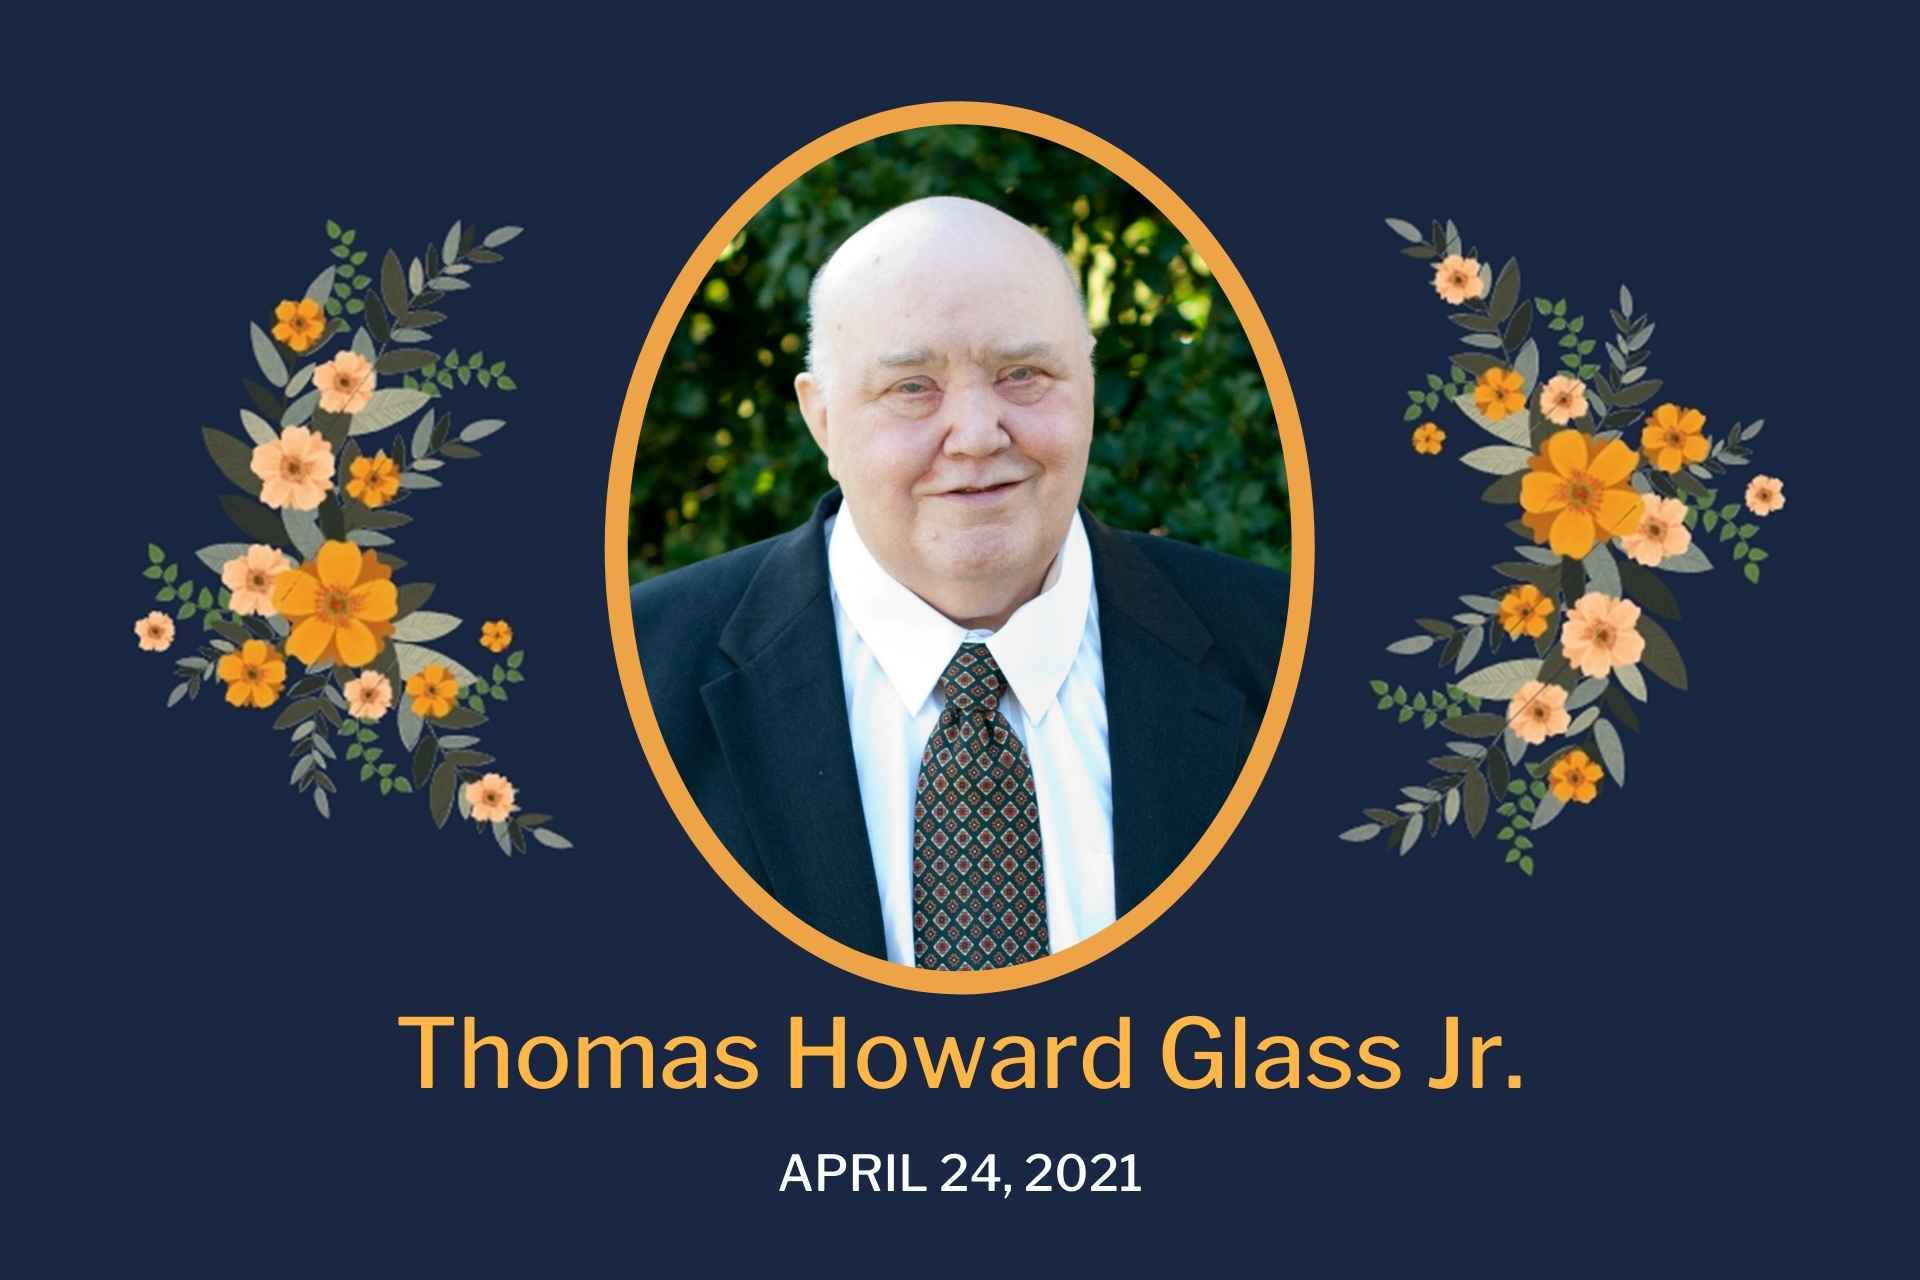 Obituary Thomas Glass